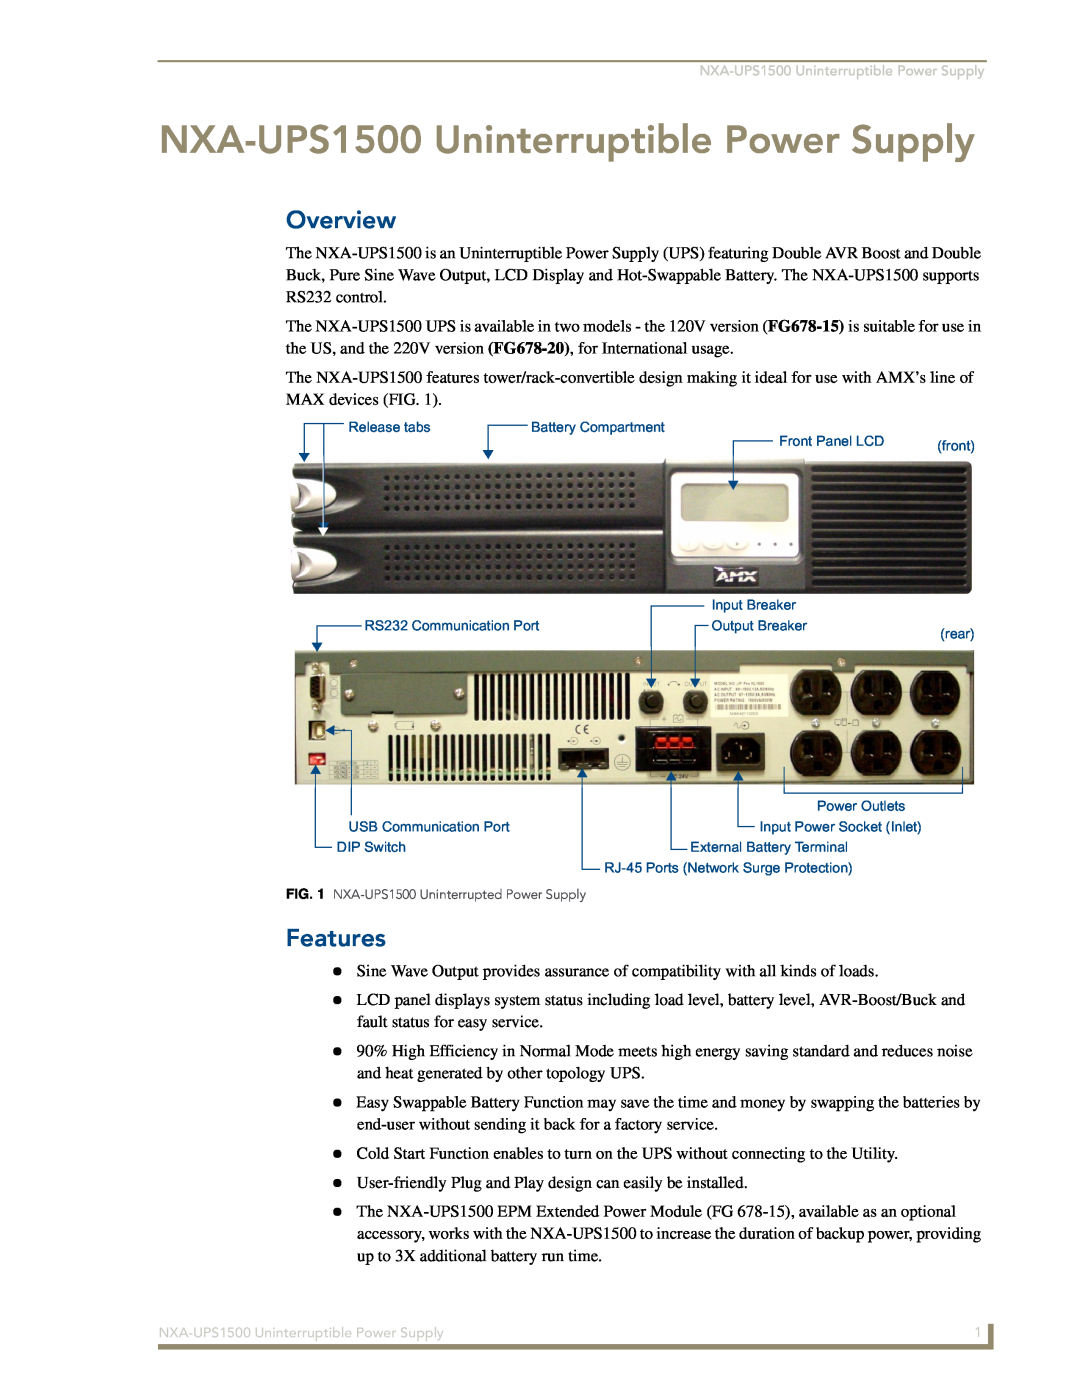 AMX manual NXA-UPS1500 Uninterruptible Power Supply, Overview, Features 